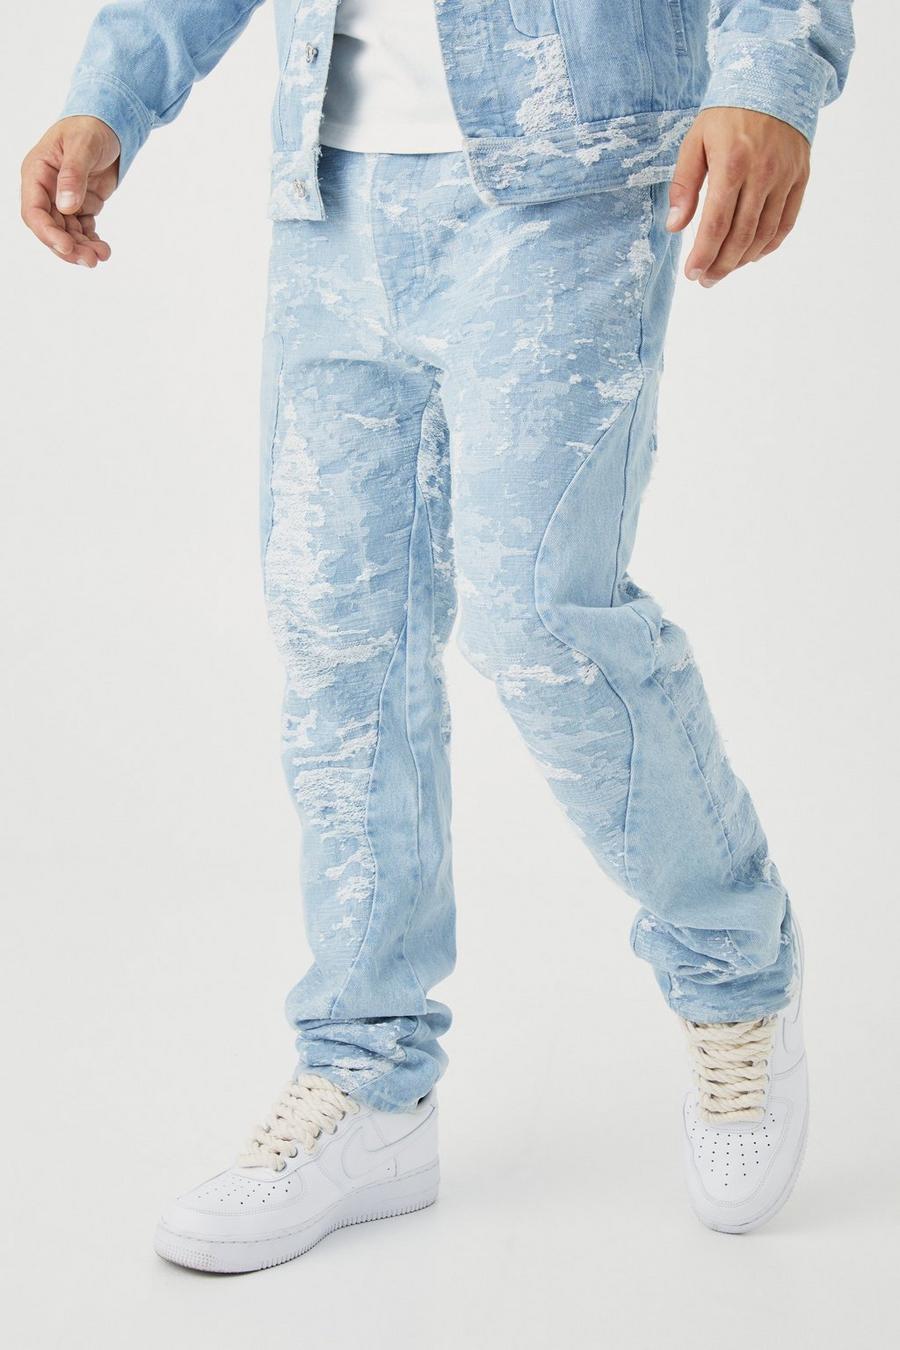 Gespleißte Jacquard Jeans mit geradem Bein, Light blue blau